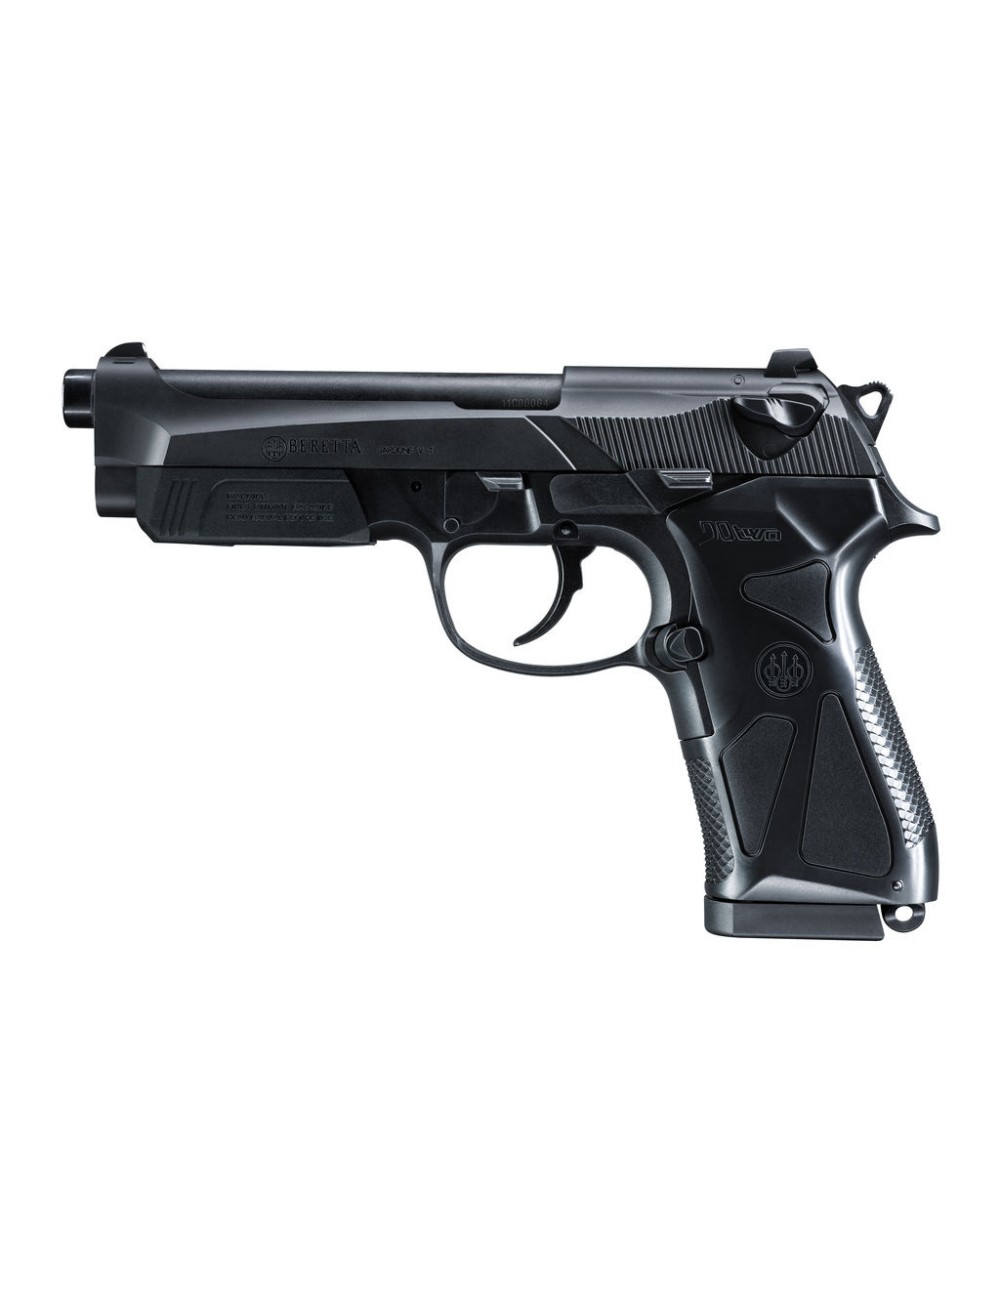 Pistola Airsoft Manual H&K P30 6mm muelle, Comprar online